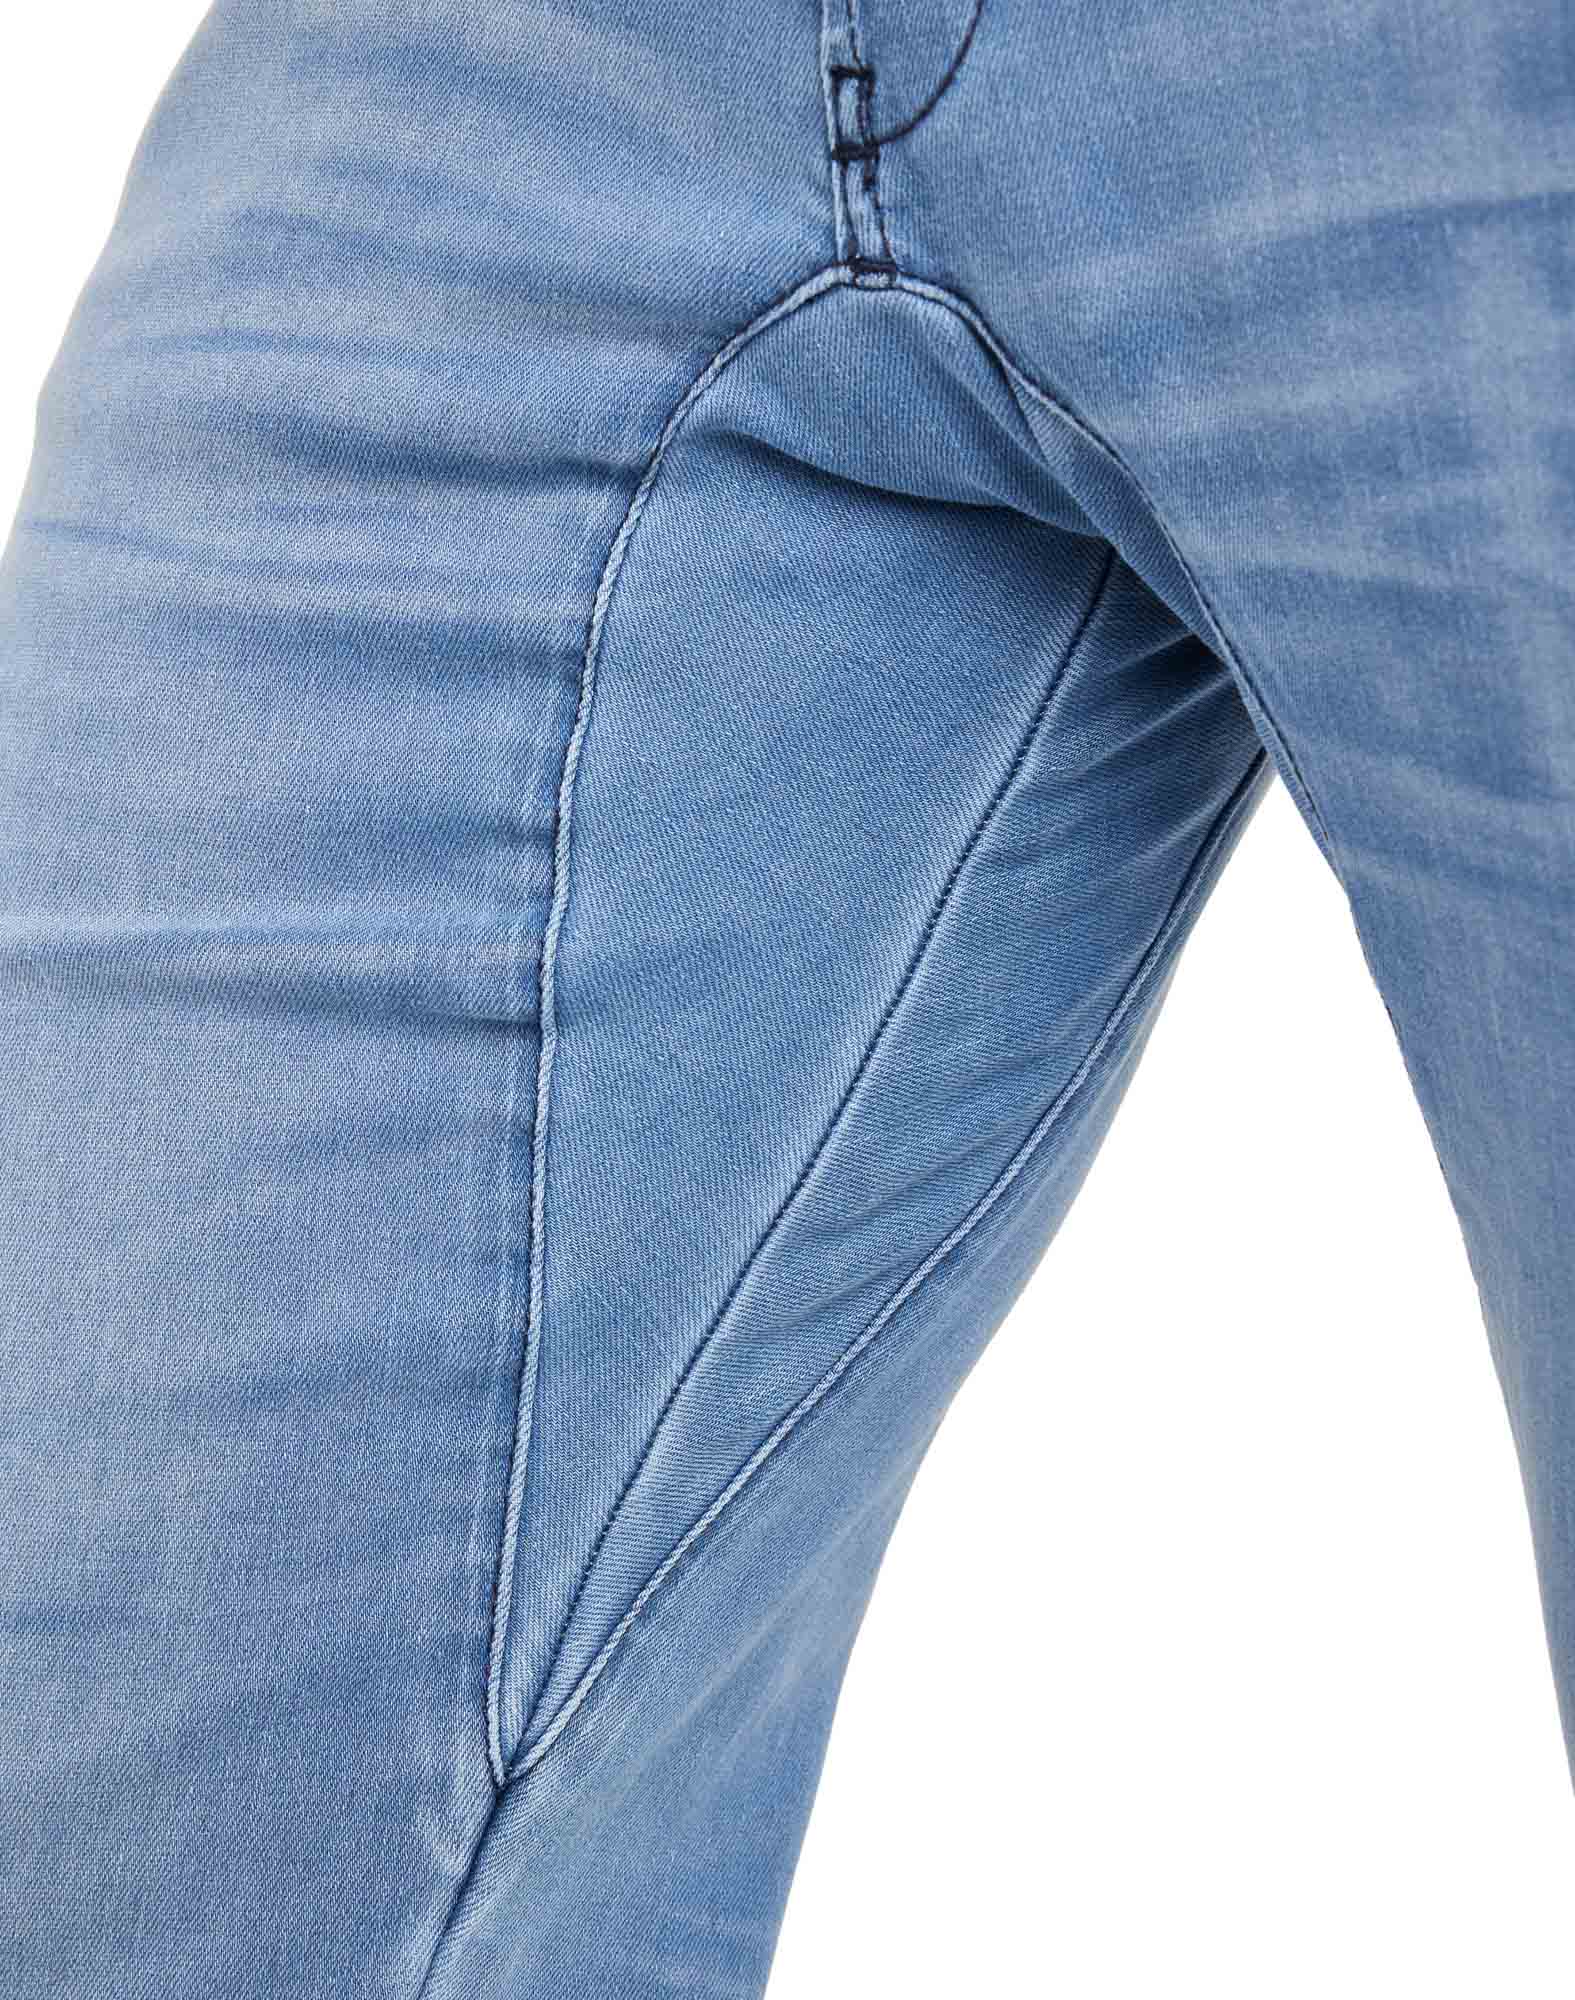 Men's pants DENING OFF SOFT